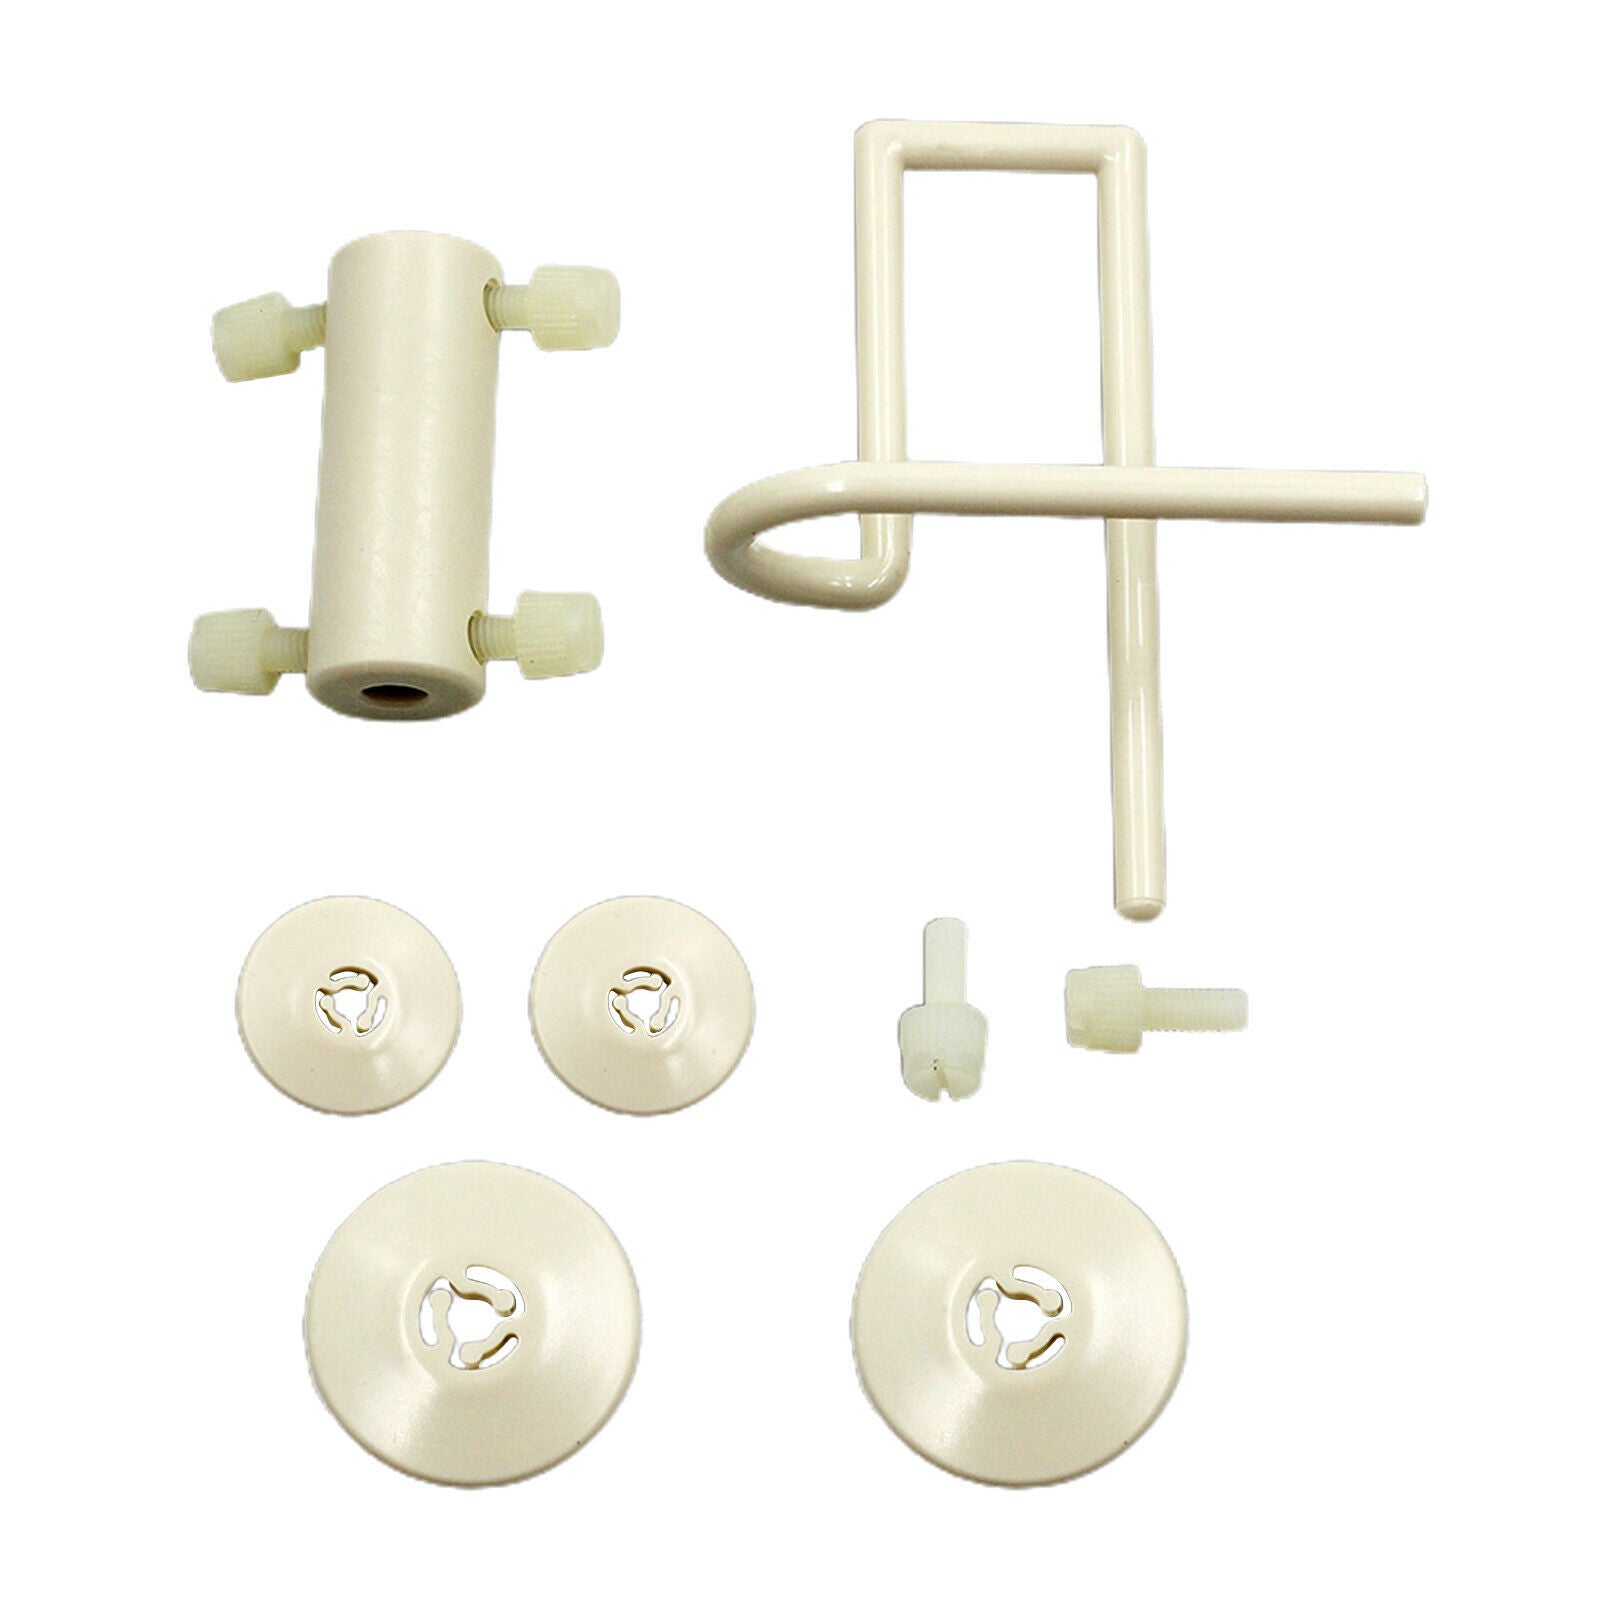 Sewing Machine Thread Spool Holder Pin Adapter Rack Bracket Tool Supplies